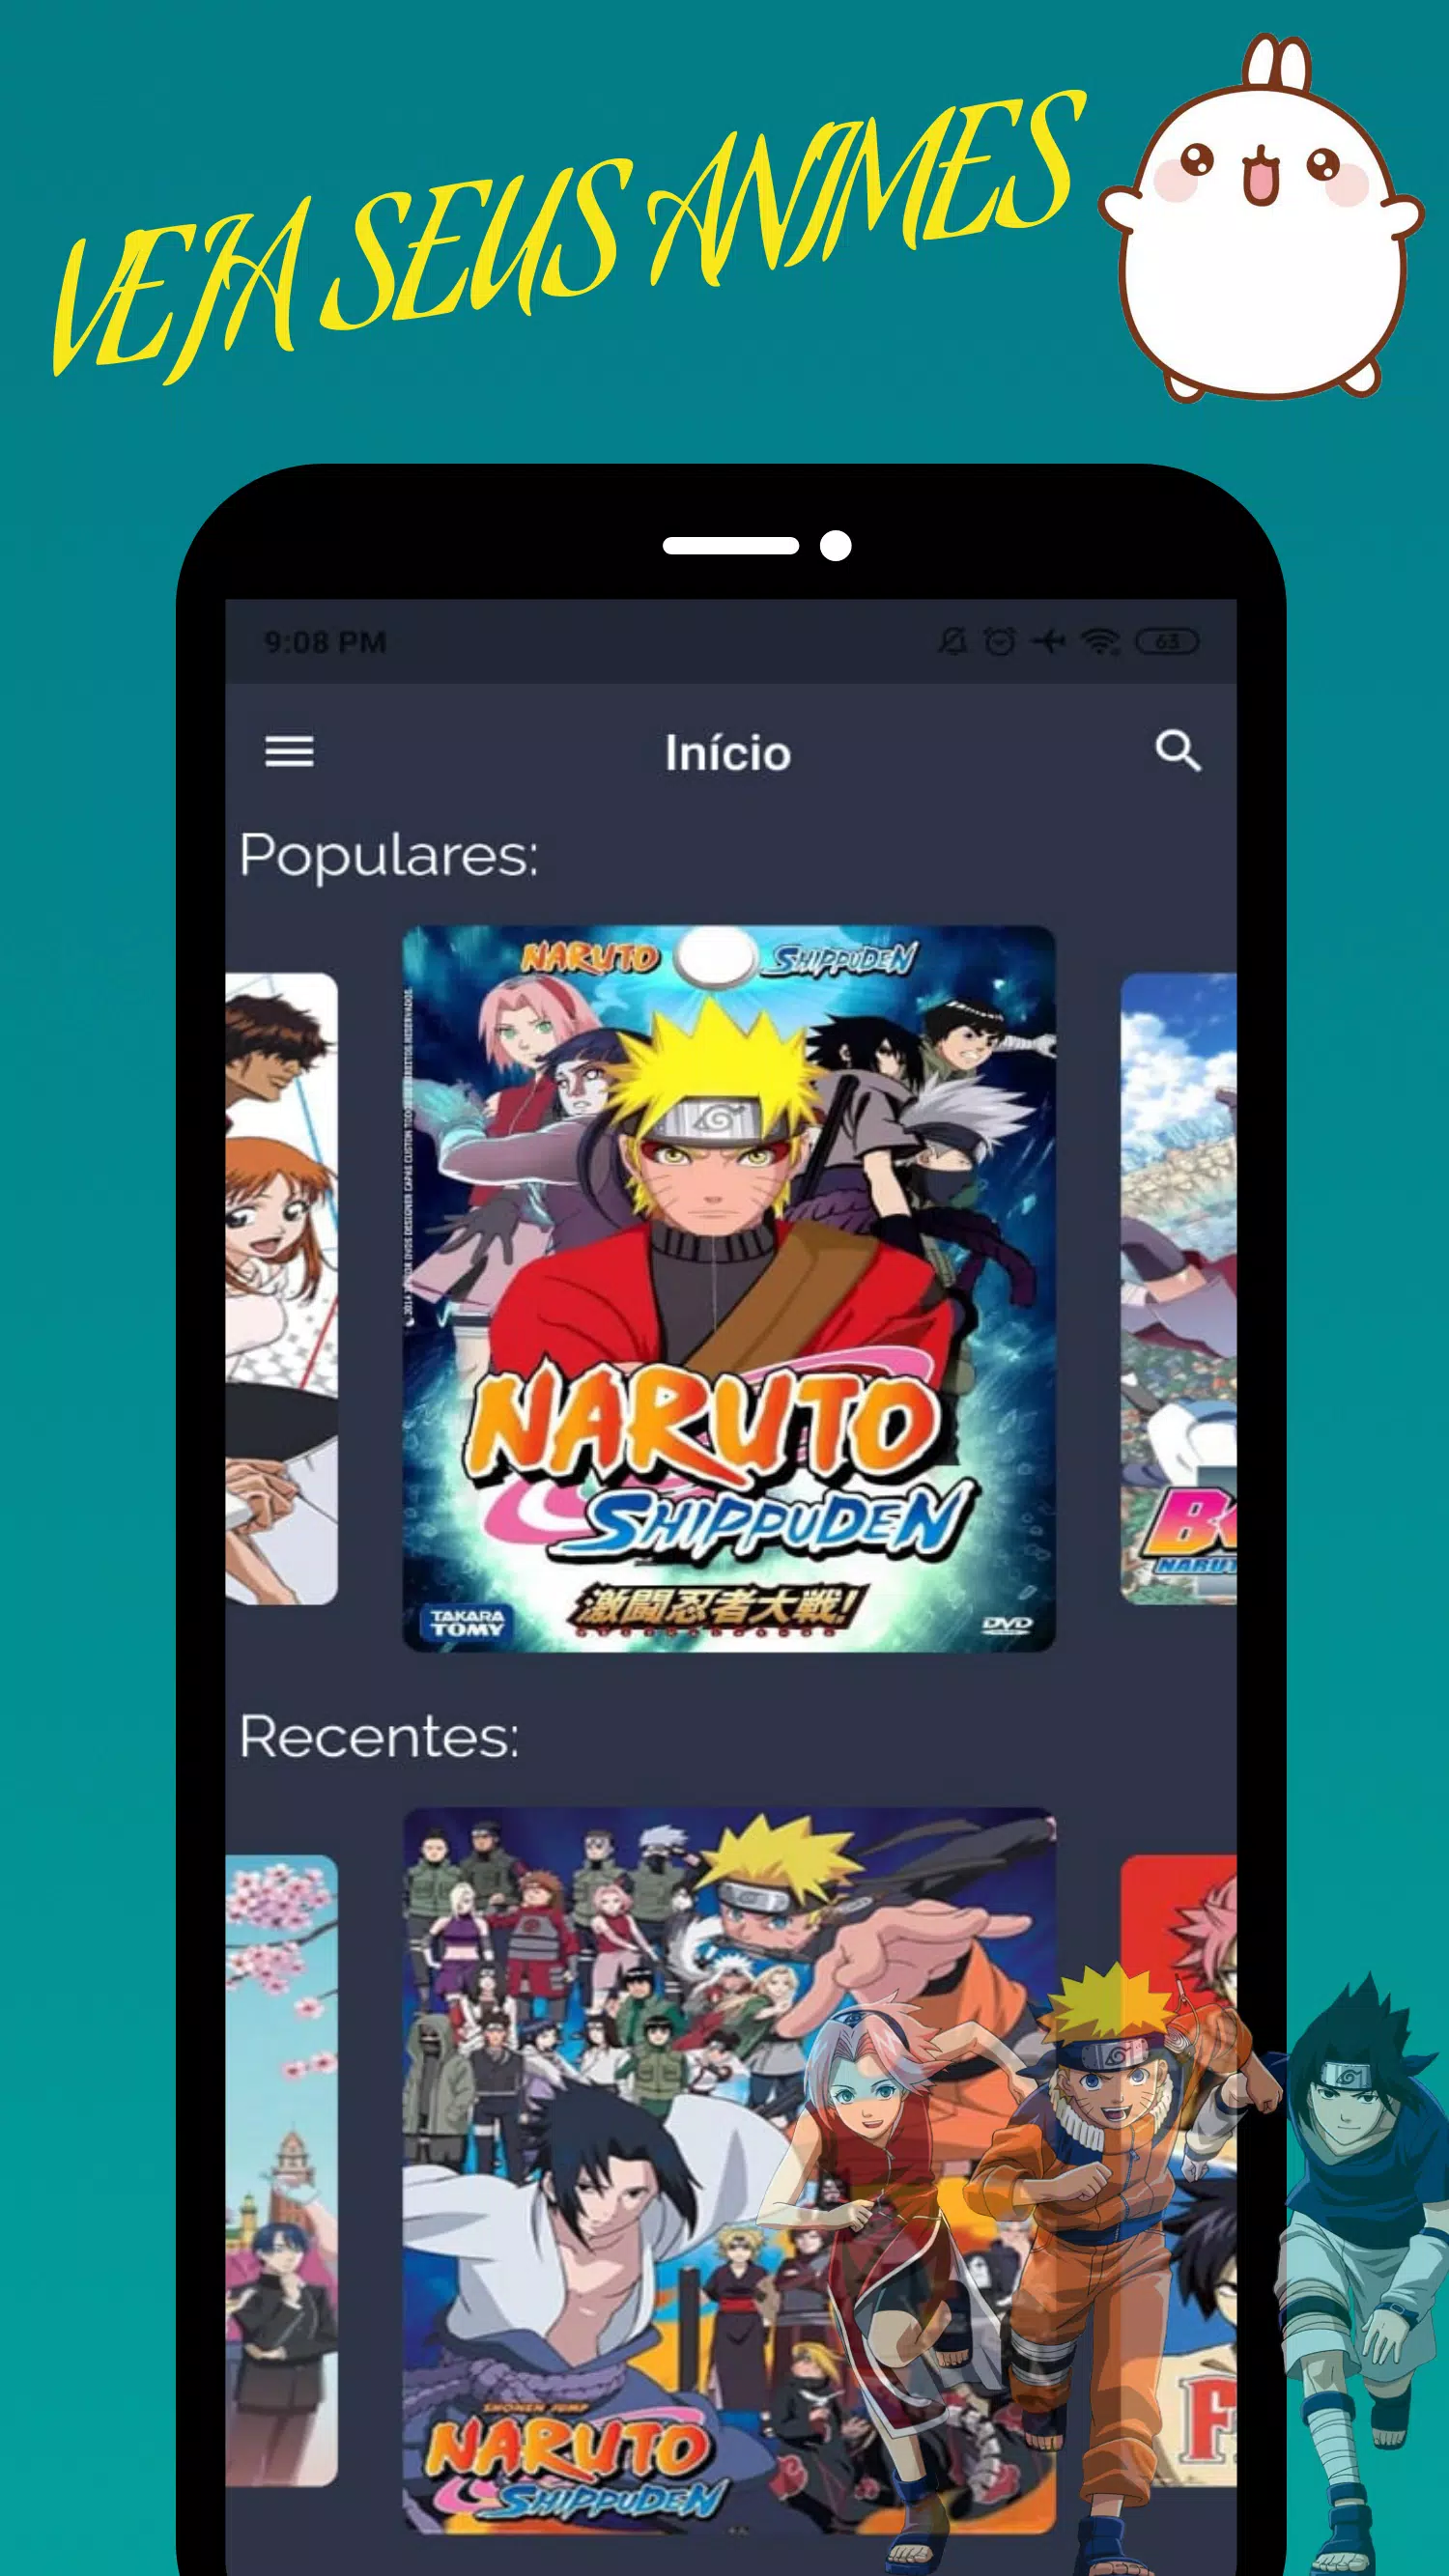 Anime Tube Brasil Apk Download for Android- Latest version 1.0-  com.ljapps.animetubebrasil